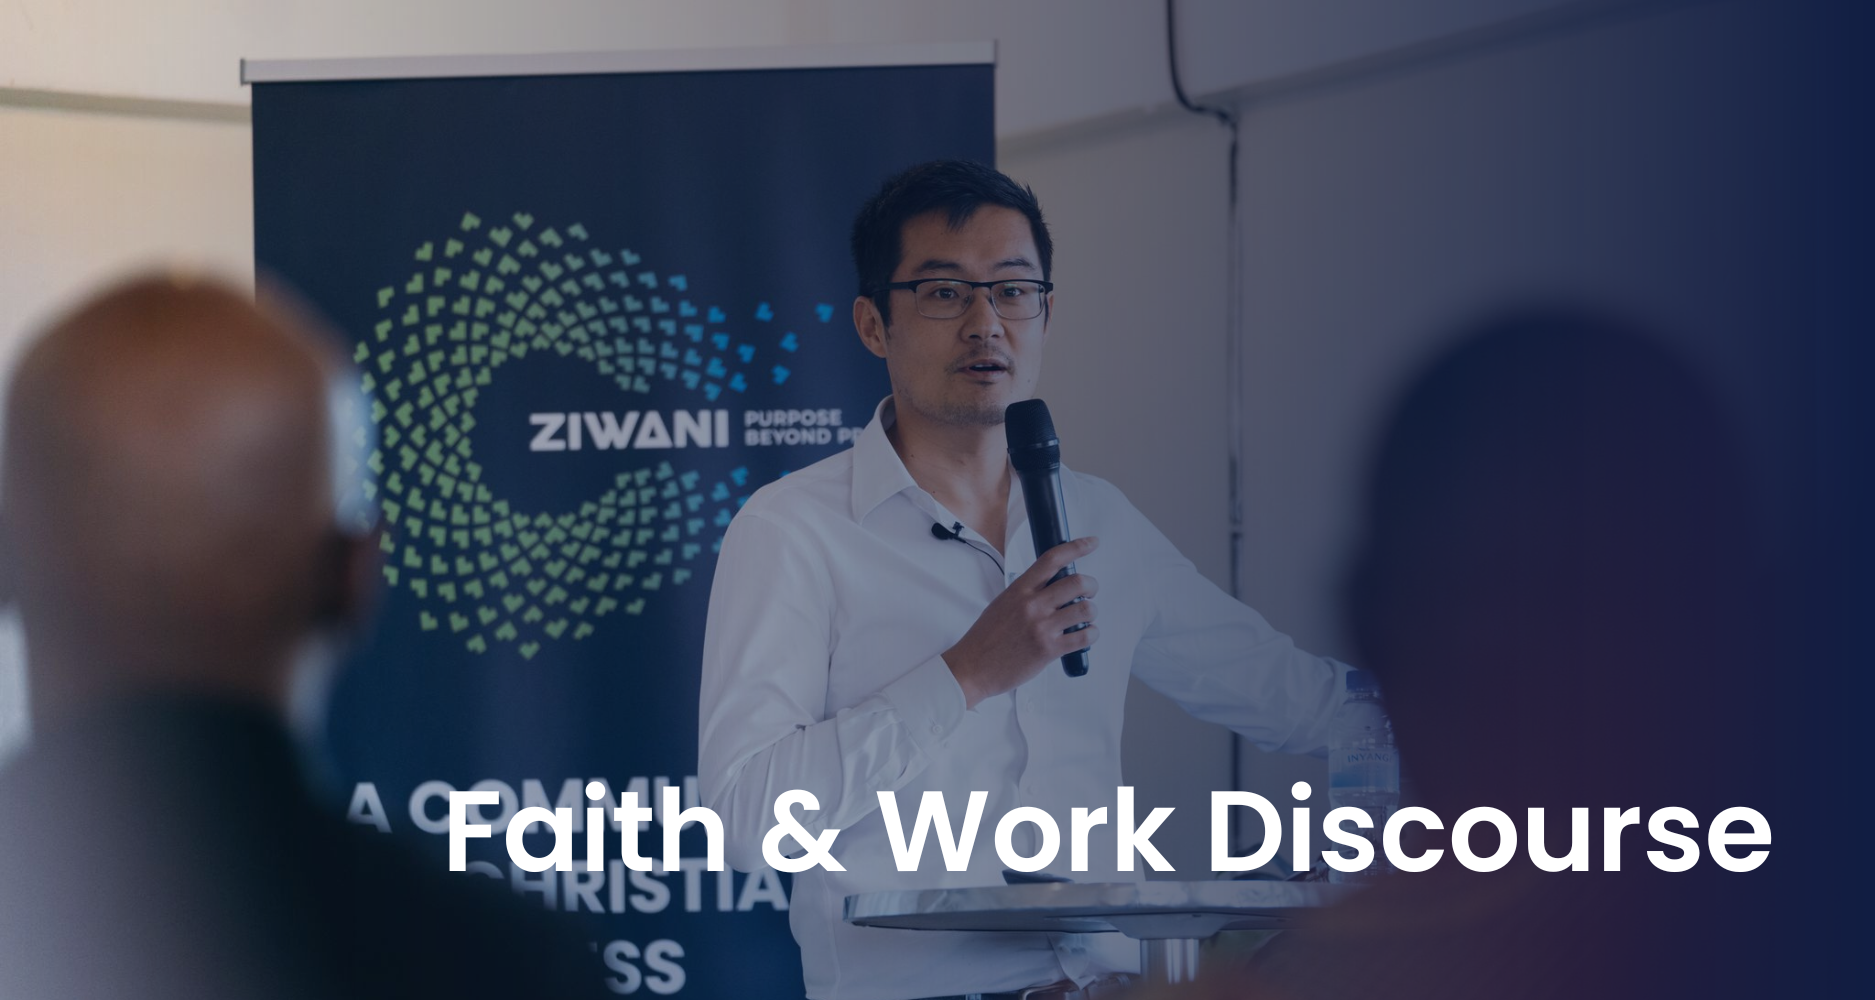 Faith & Work Discourse Thumbnail Image featuring speaker Paul Kim